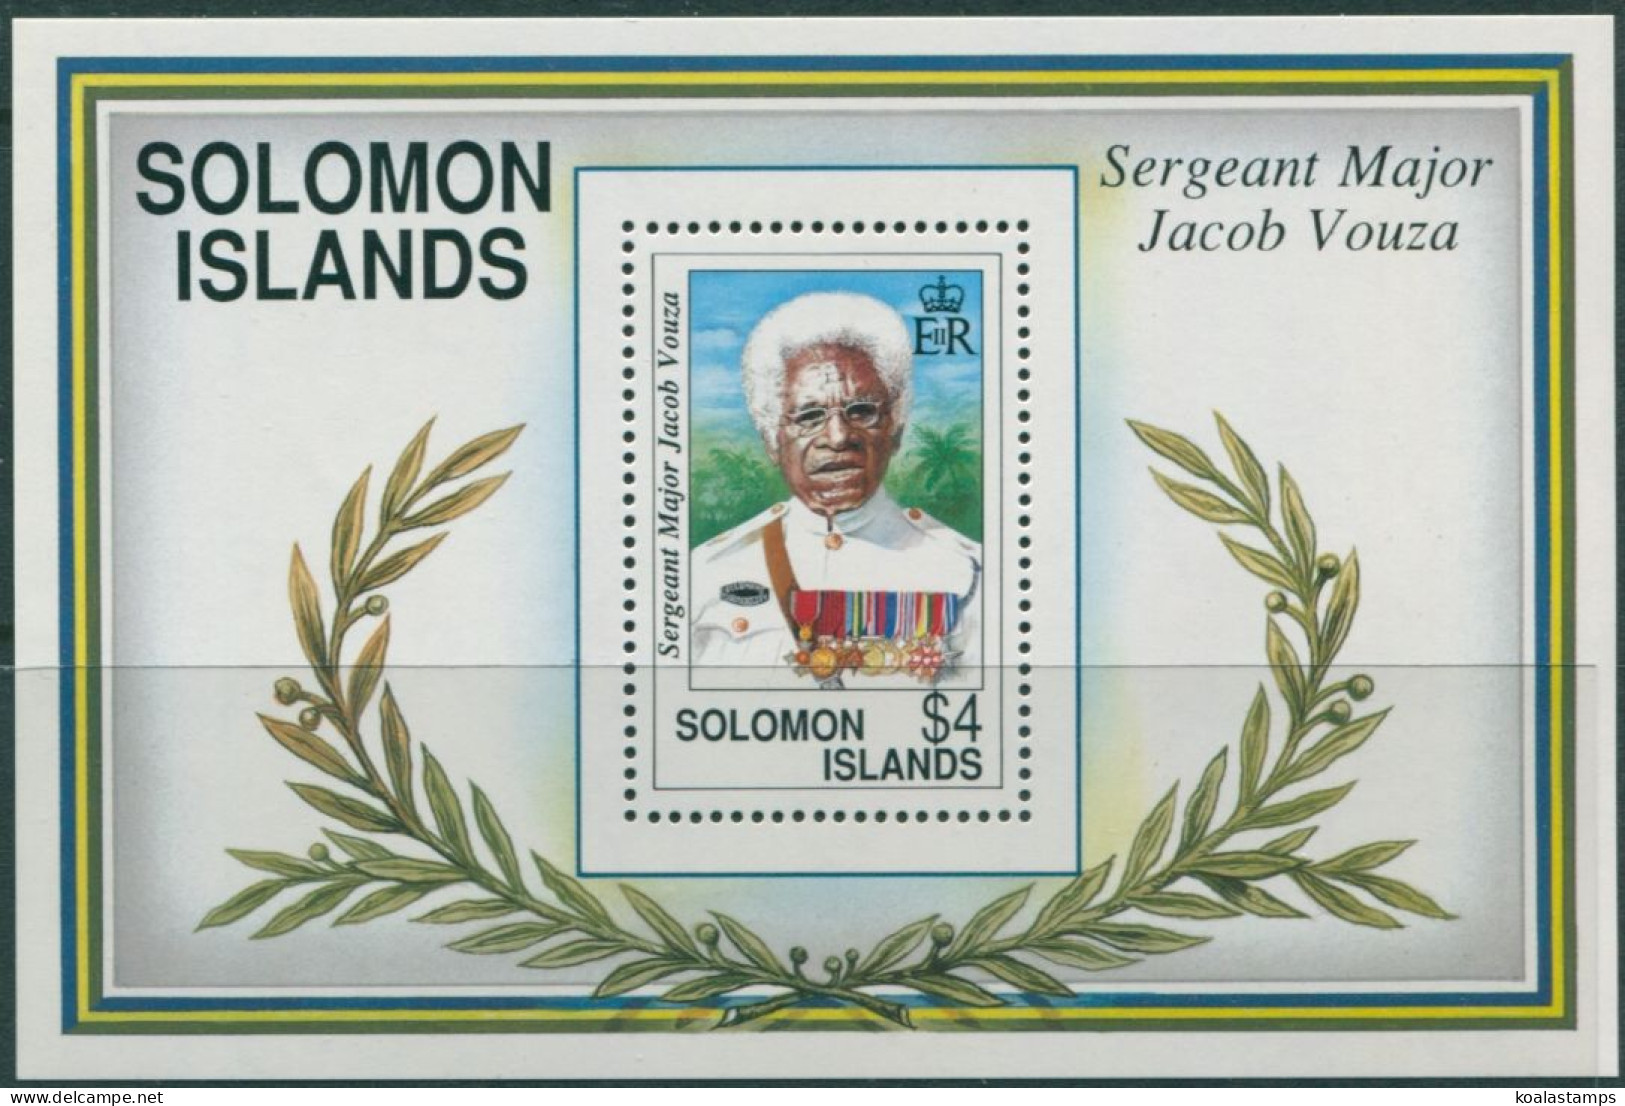 Solomon Islands 1992 SG727 WWII Jacob Vouza MS MNH - Solomoneilanden (1978-...)